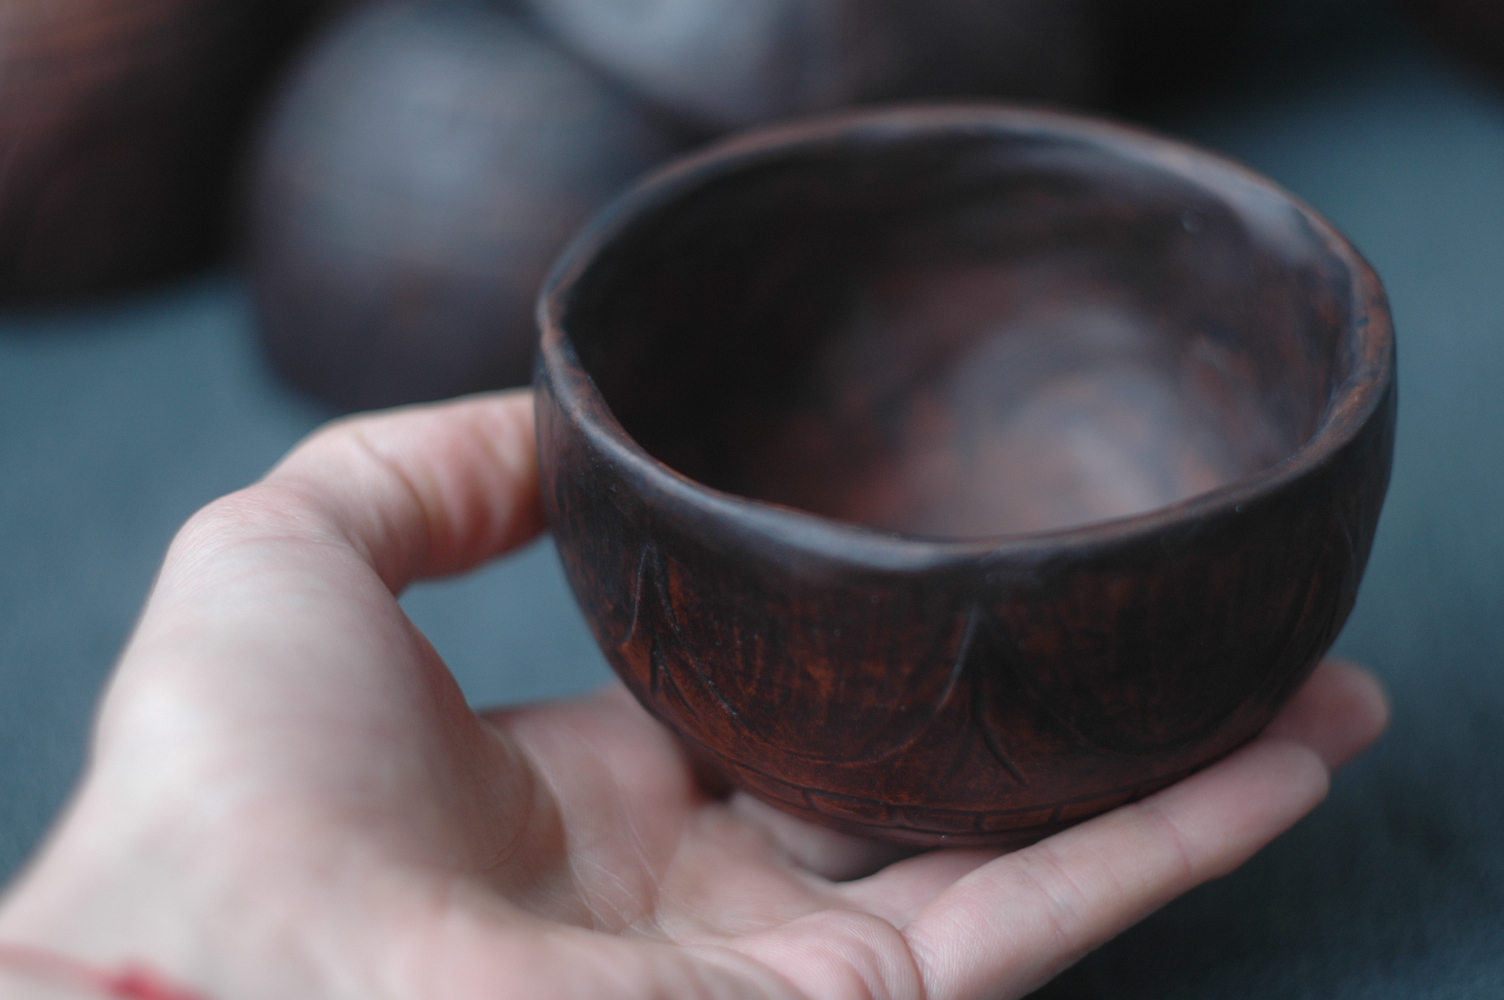 Pottery ceramic bowl “Sun”